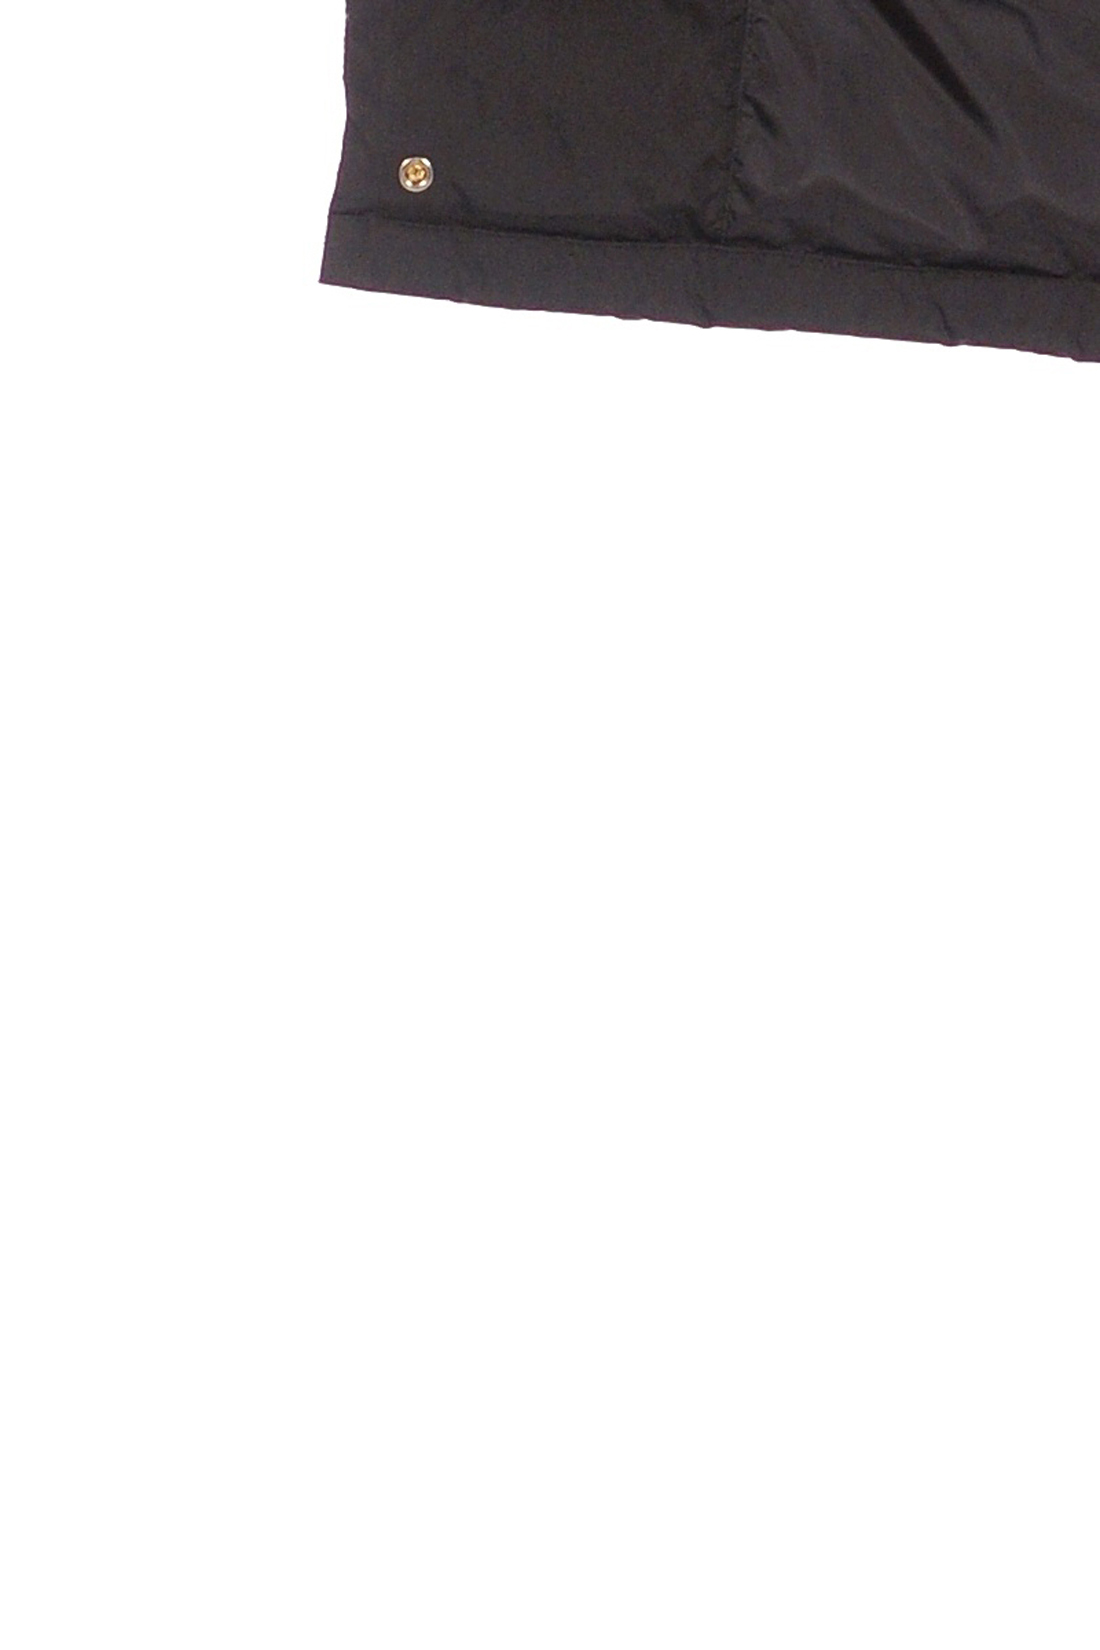 Пуховик (арт. baon B000595), размер XL, цвет черный Пуховик (арт. baon B000595) - фото 3